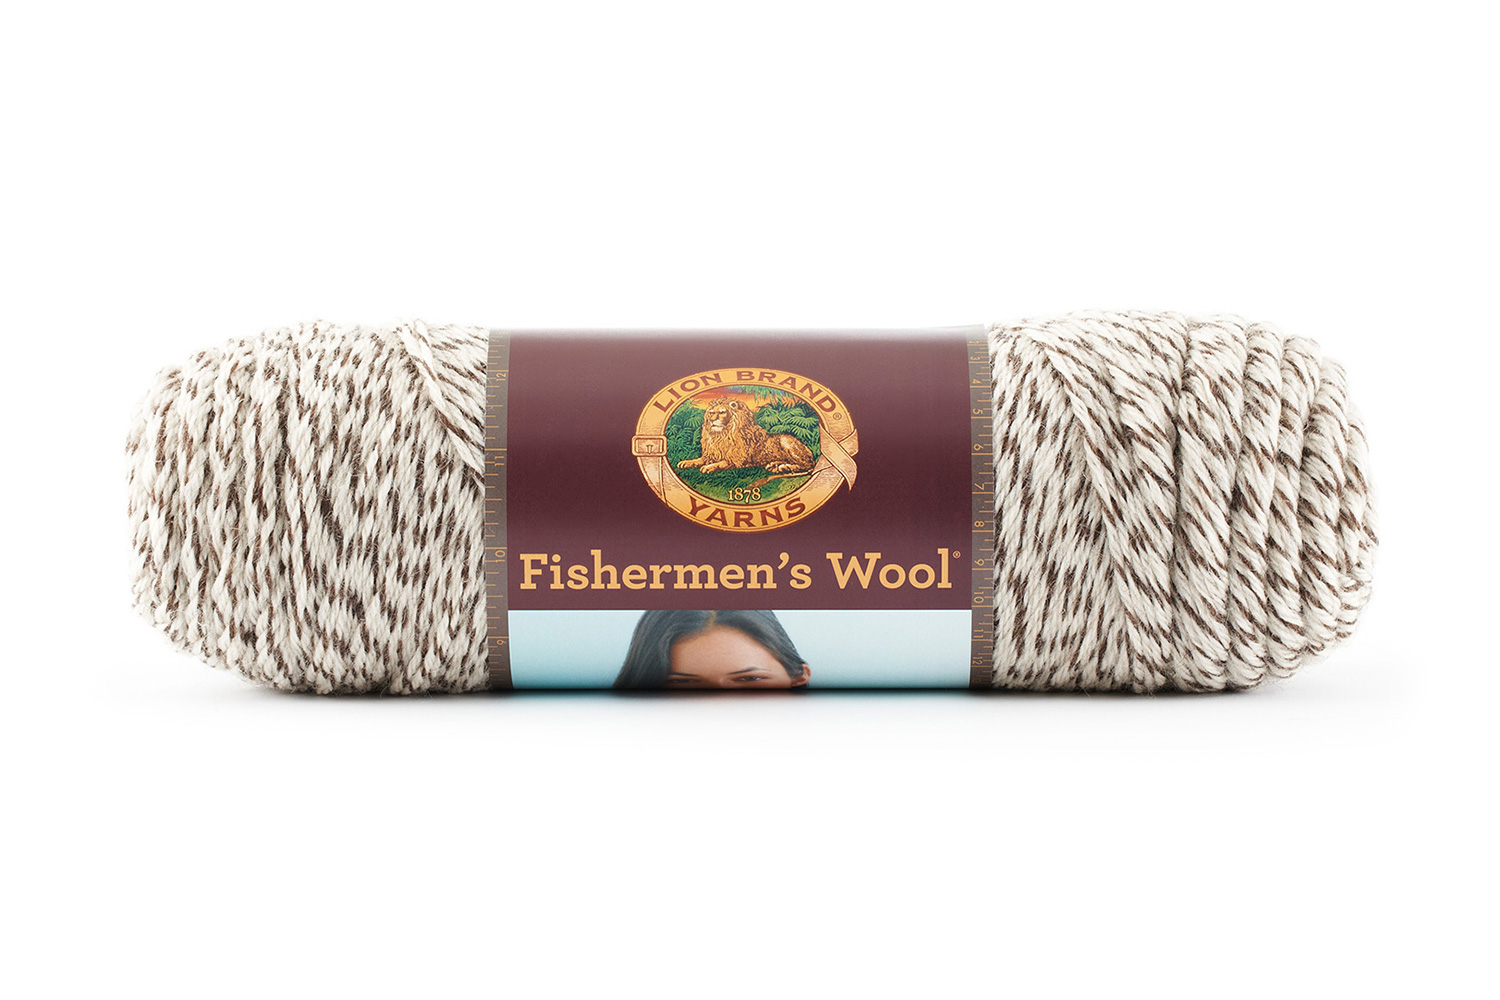 Fishermen's Wool Yarn 